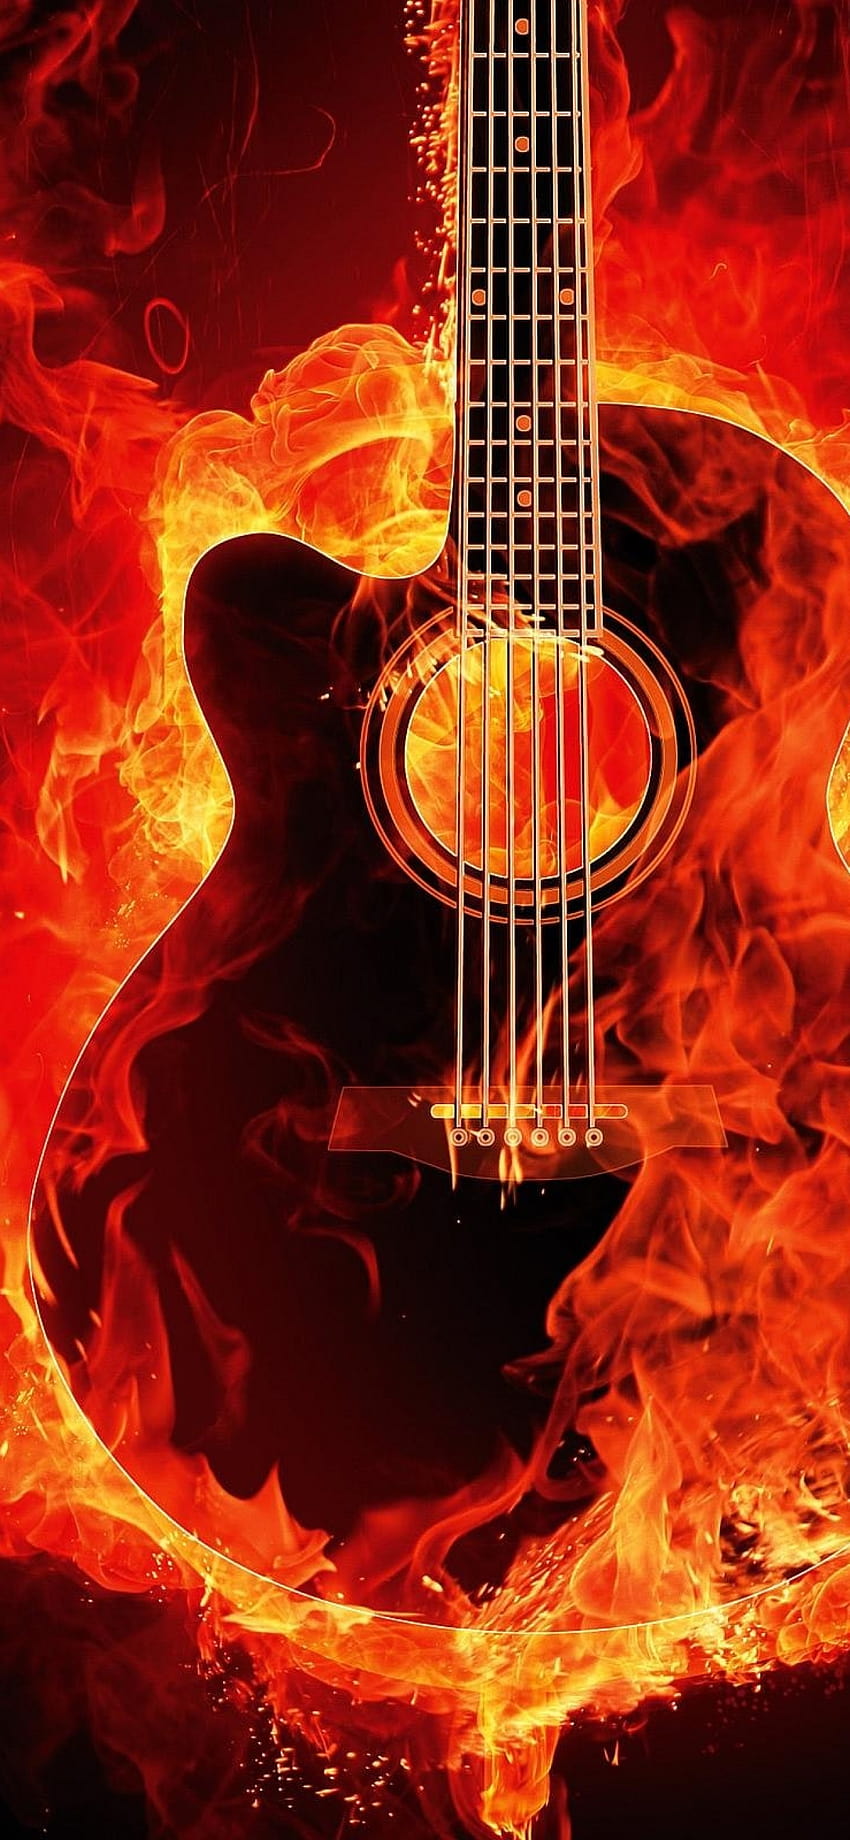 Flaming Guitar, negro, Instrumento musical, Fuego, Negro/Oscuro, guitarra ardiente fondo de pantalla del teléfono